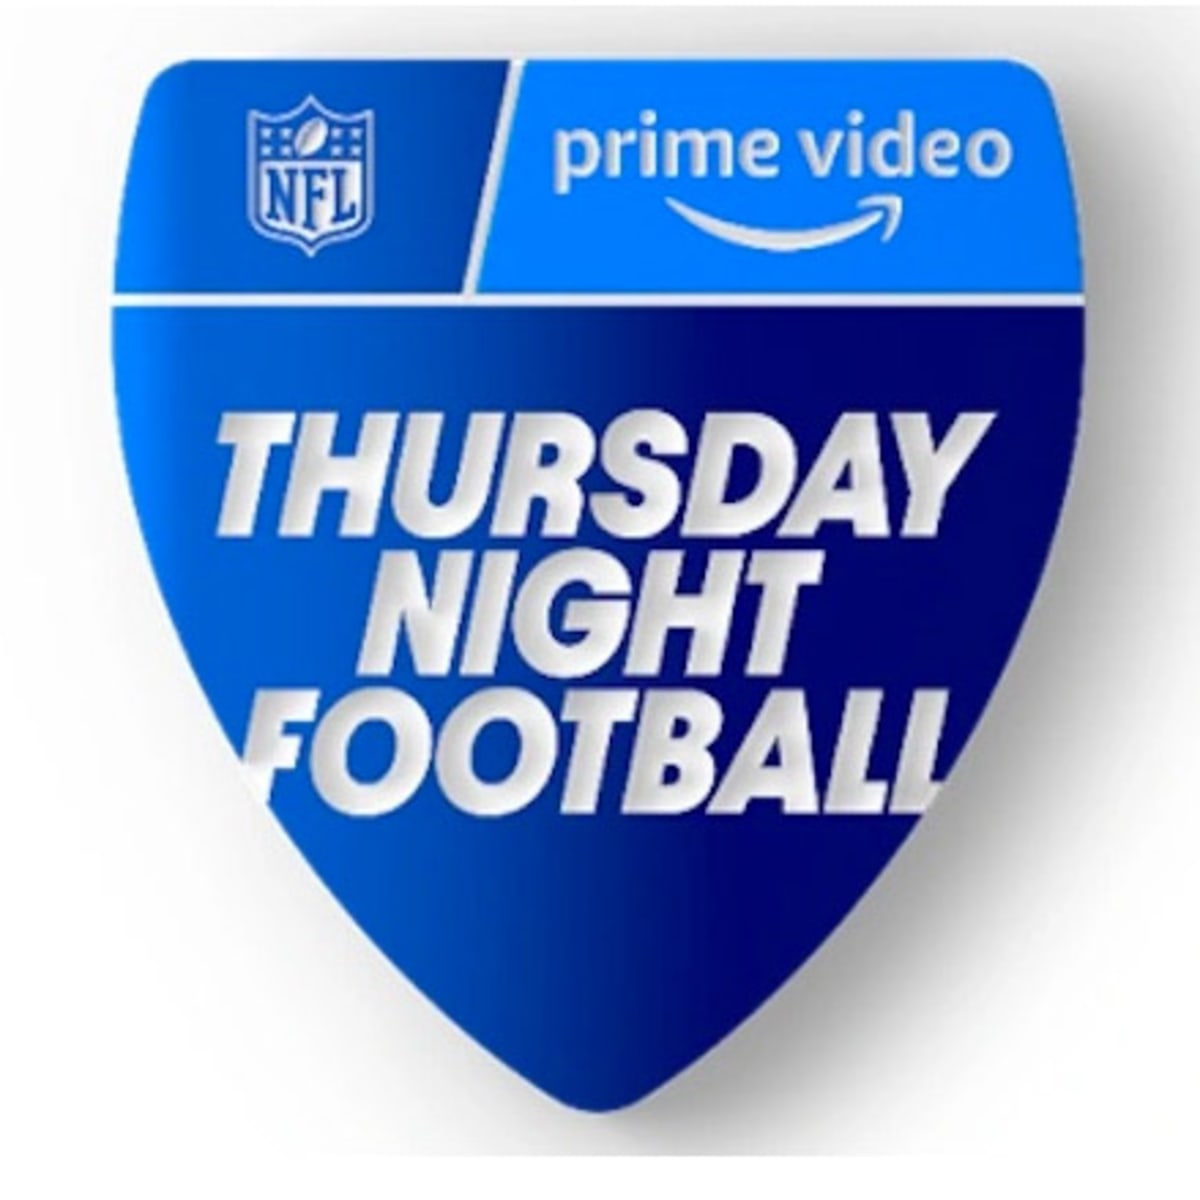 Thursday Night Football: No NFL TNF Game on TV Today, Dec. 3